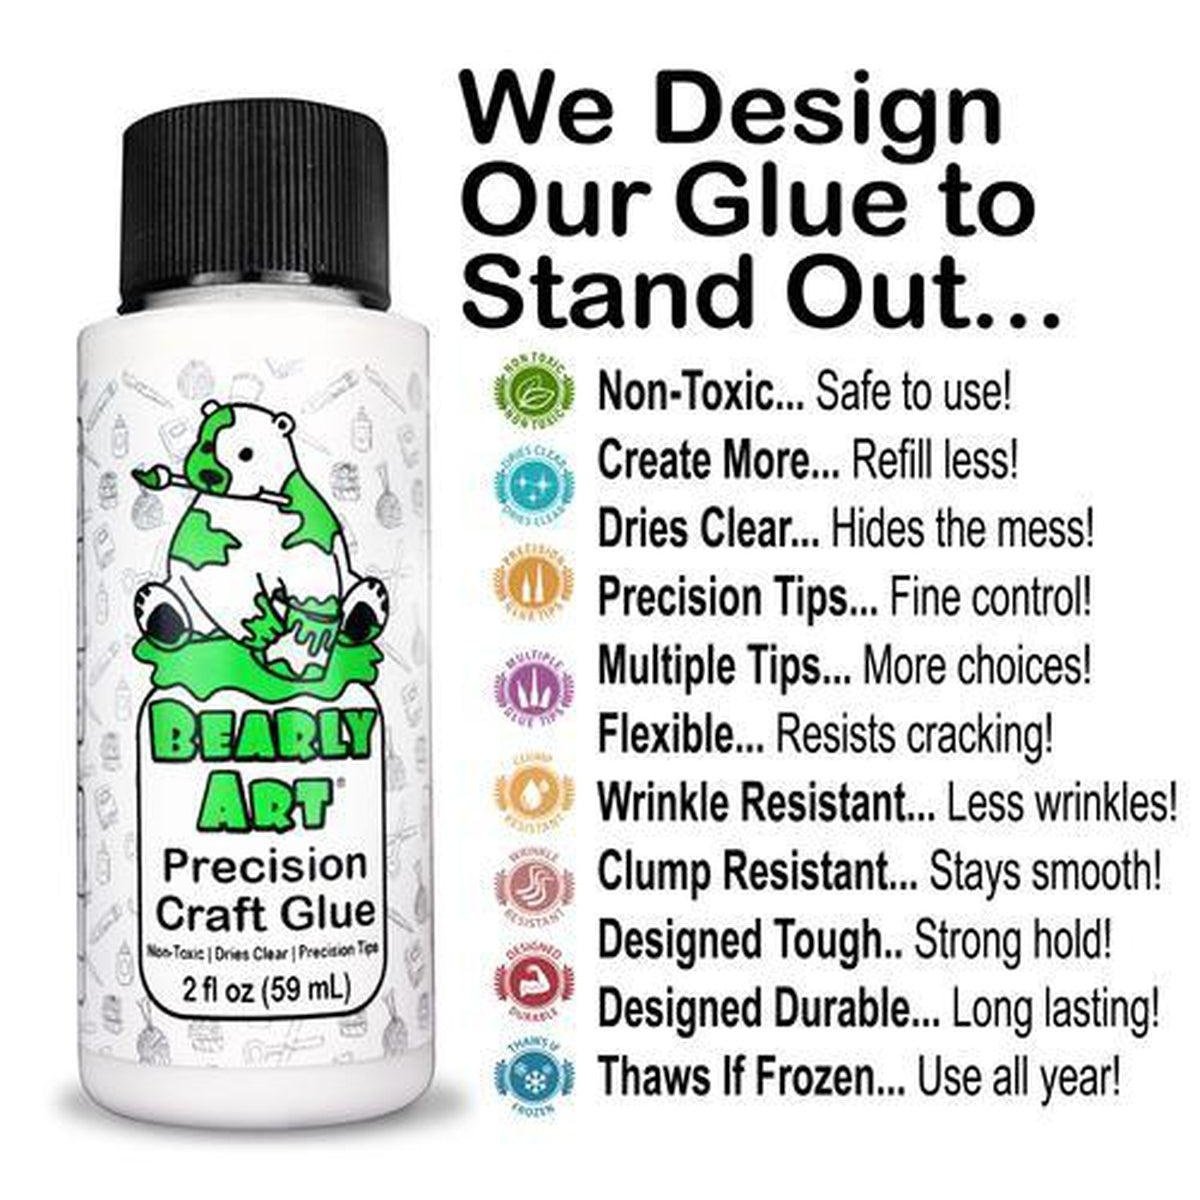 Bearly Art - Precision Craft Glue - The Refill